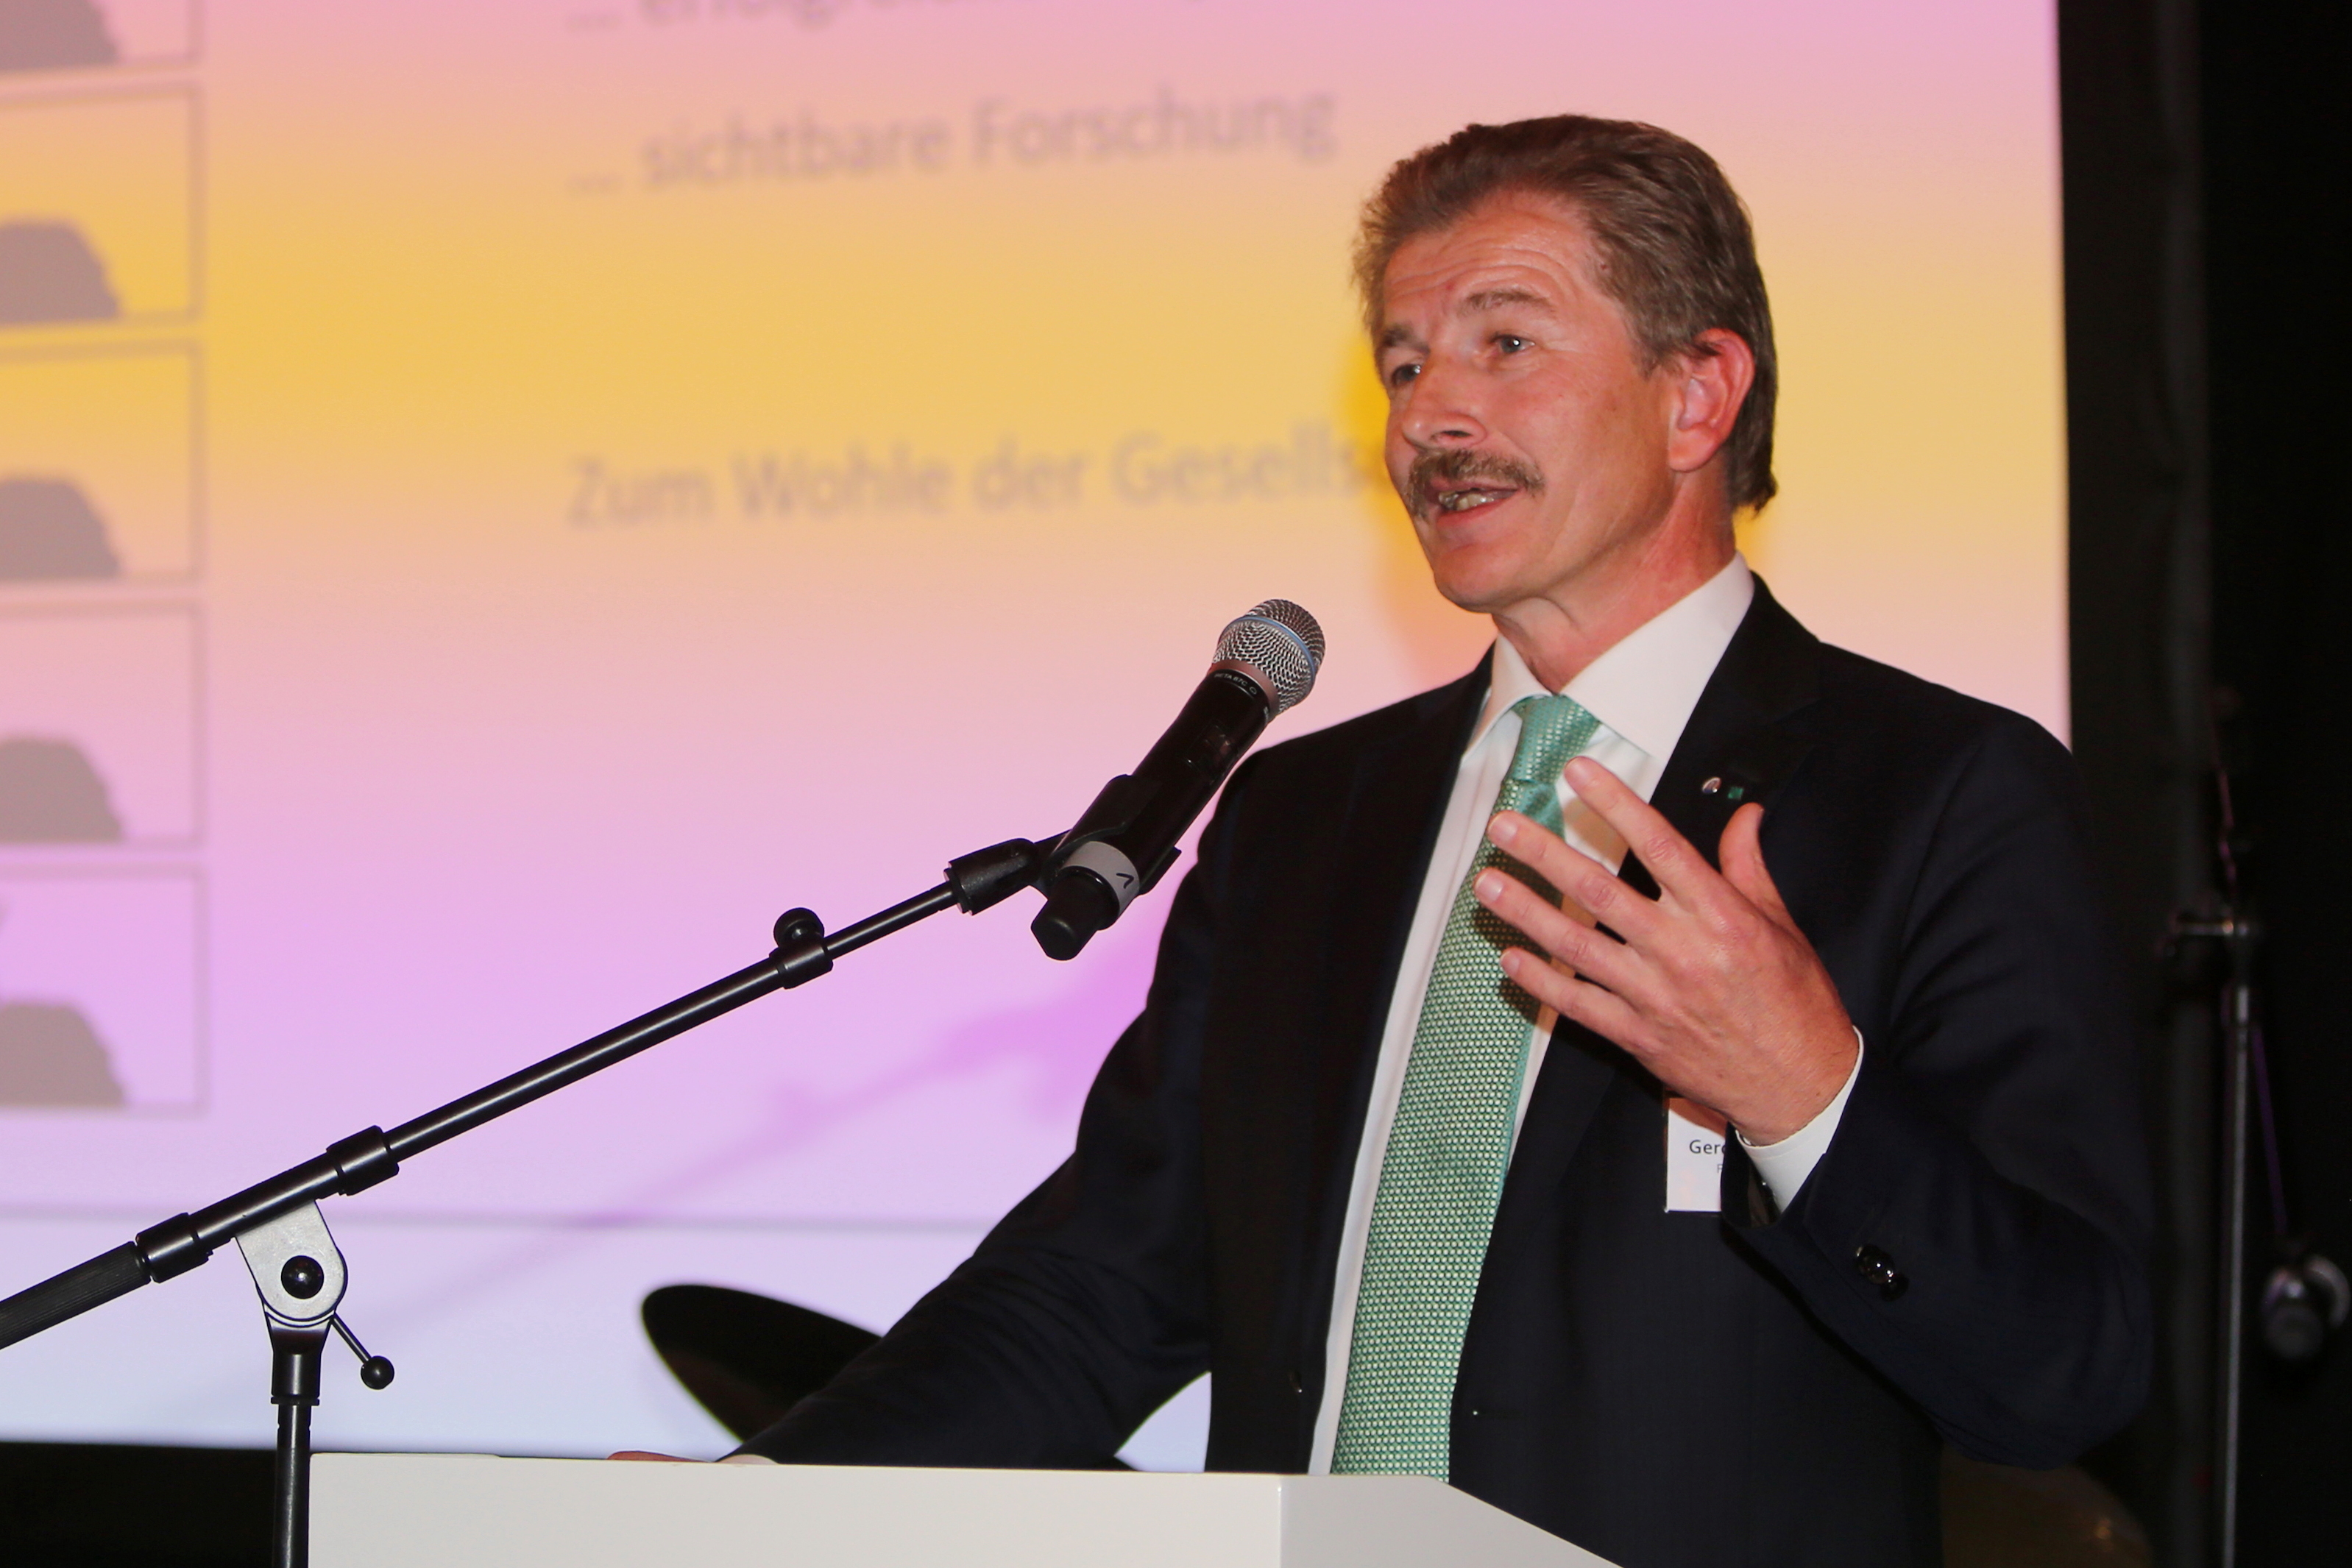 Greetings from Executive Institute Manager Fraunhofer IME, Professor Gerd Geisslinger